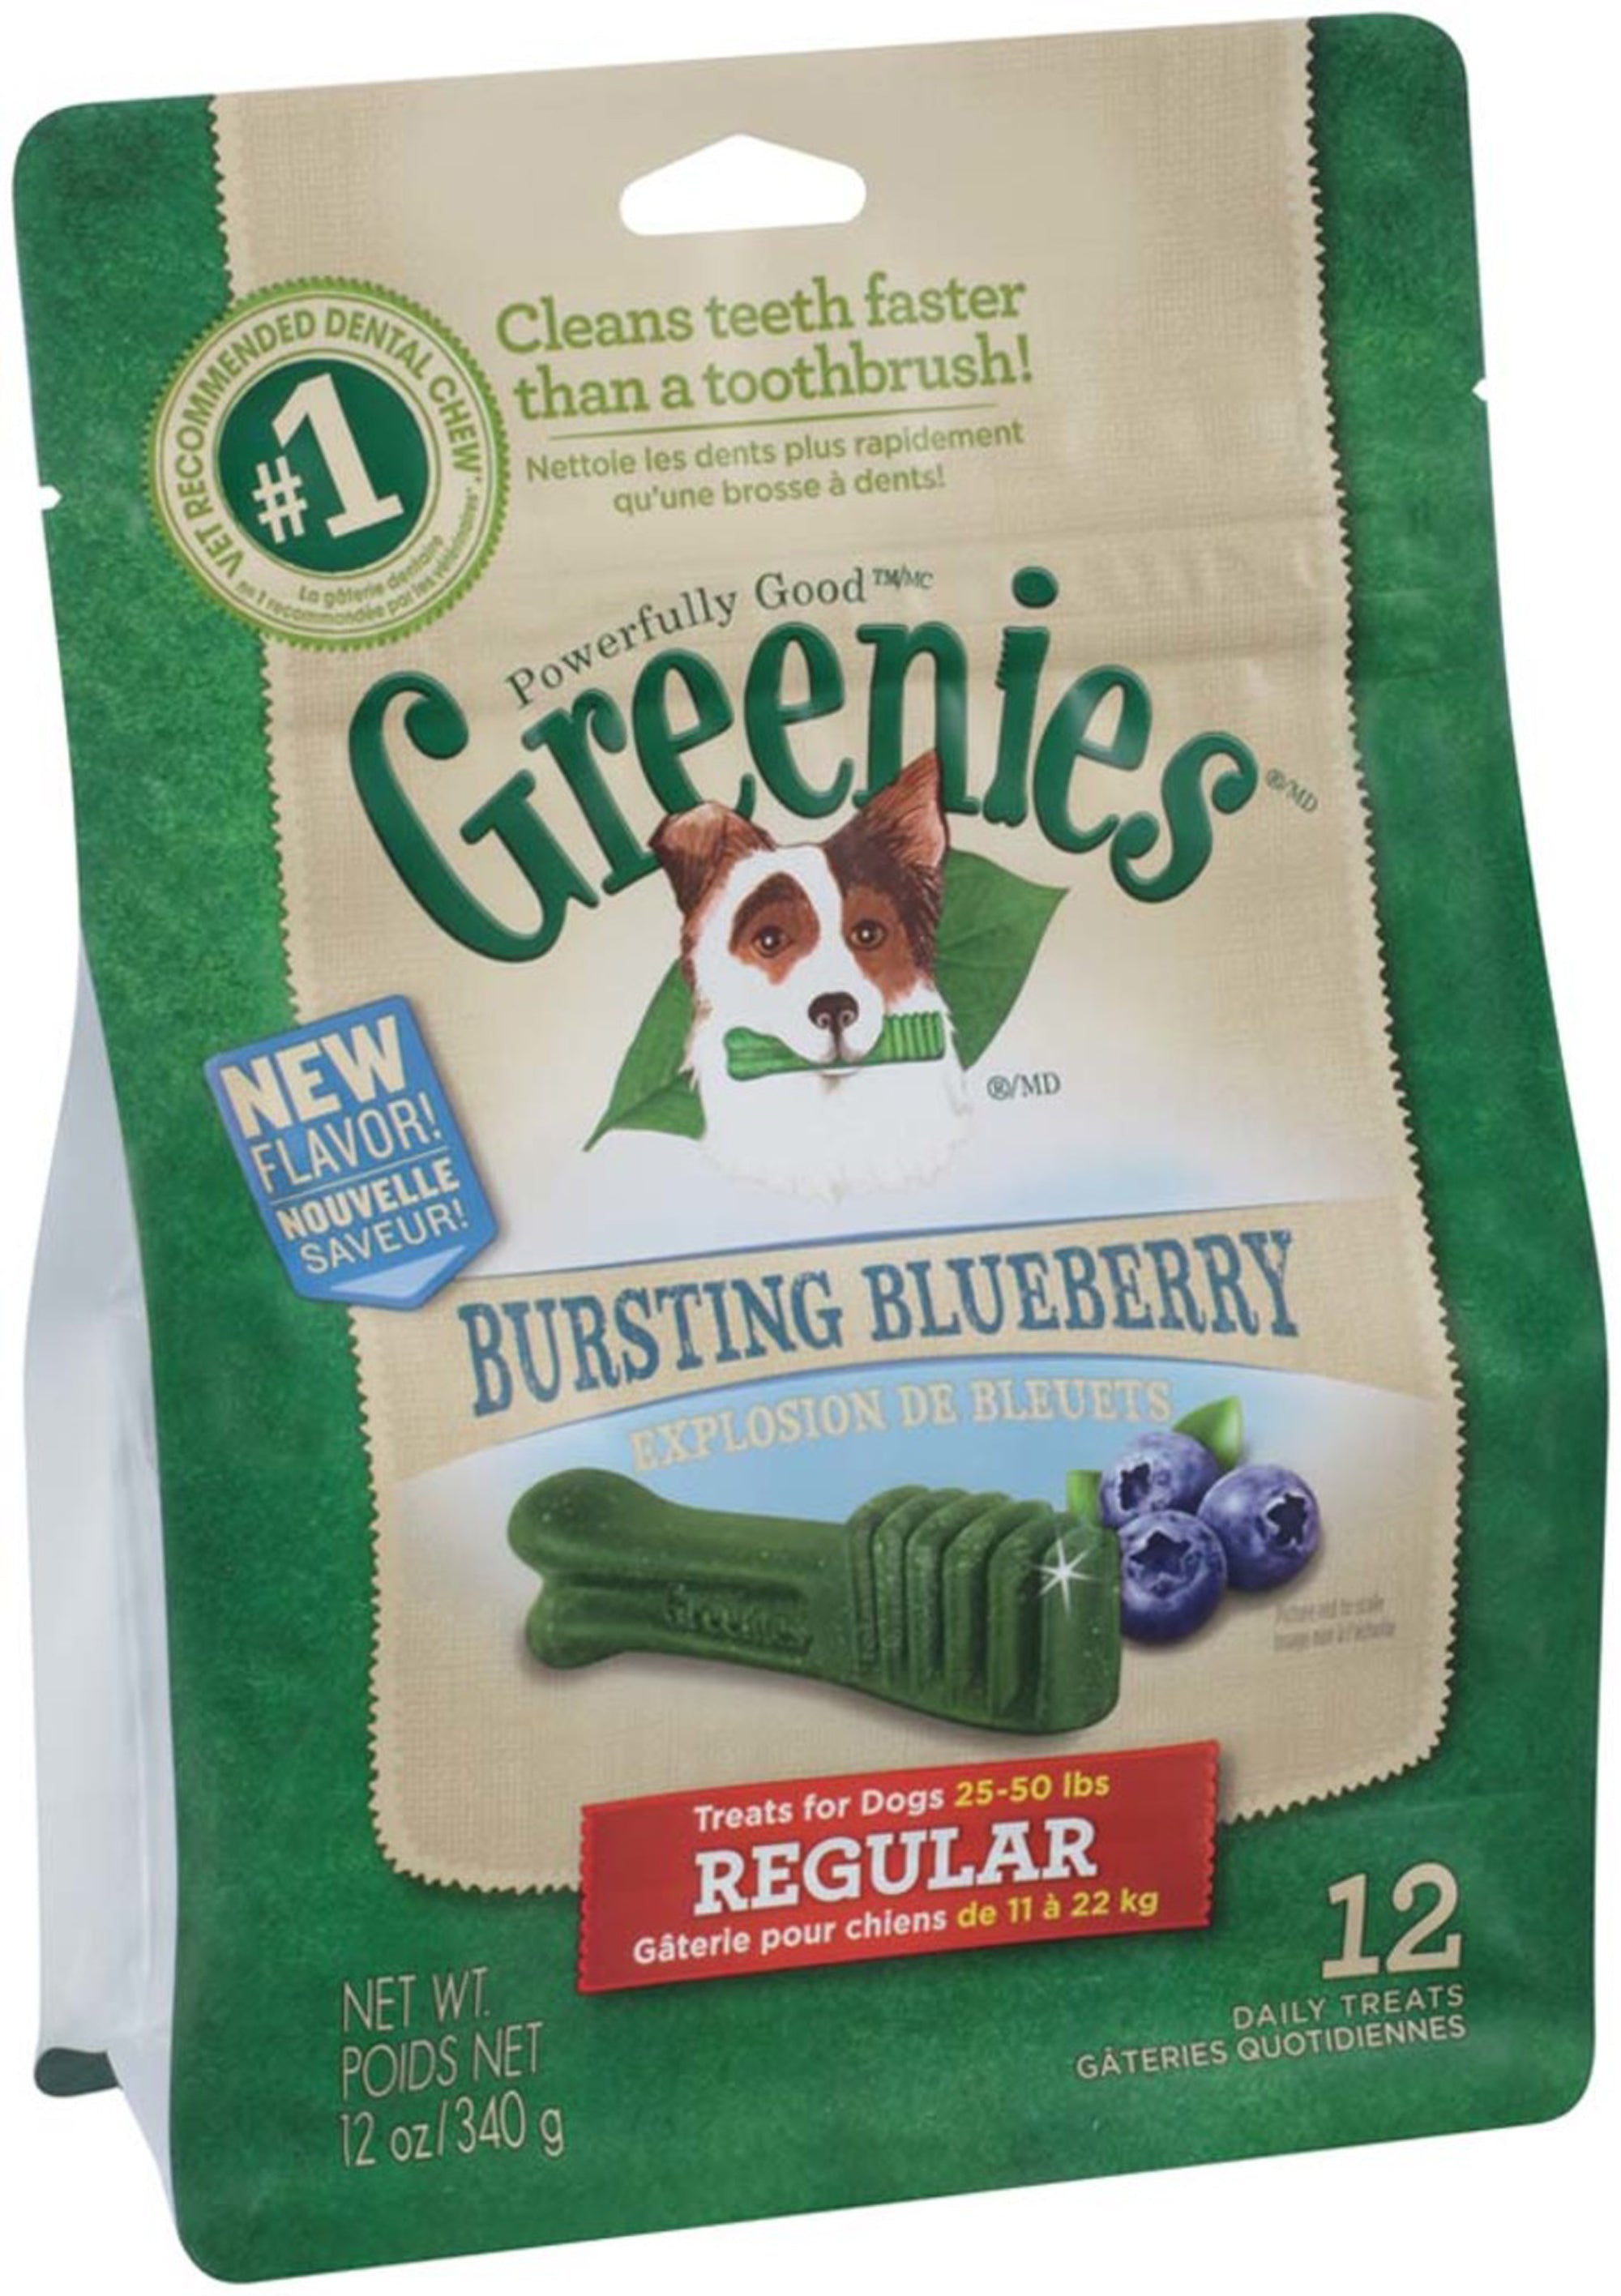 Greenies Dog Dental Treats Regular Blueberry 1ea/12 oz, 12 ct